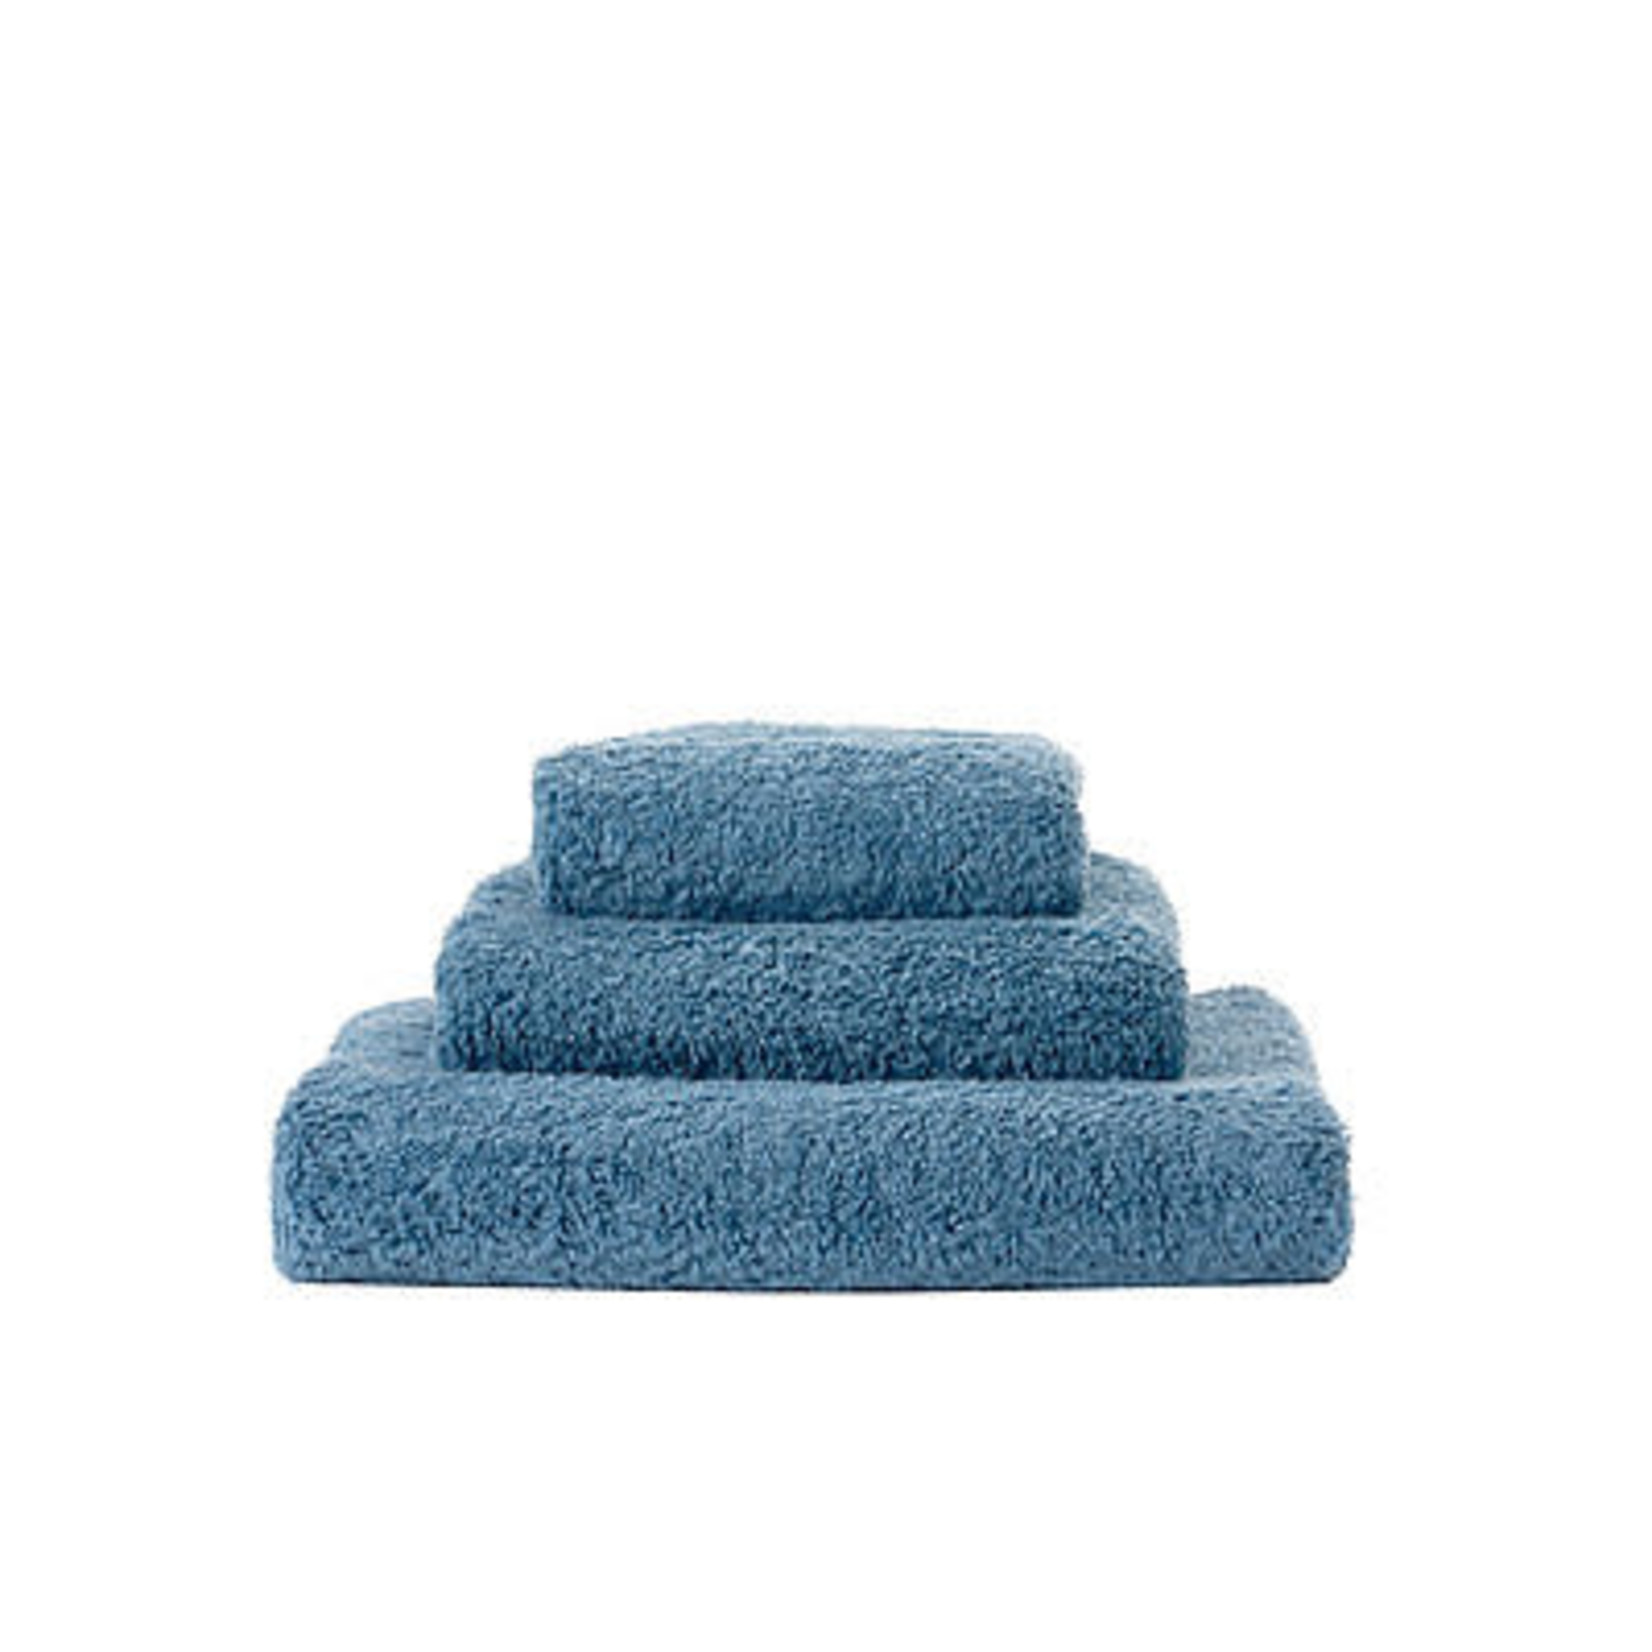 St. Geneve Super Pile Hand Towel 100% Egyptian Cotton 306 Bluestone